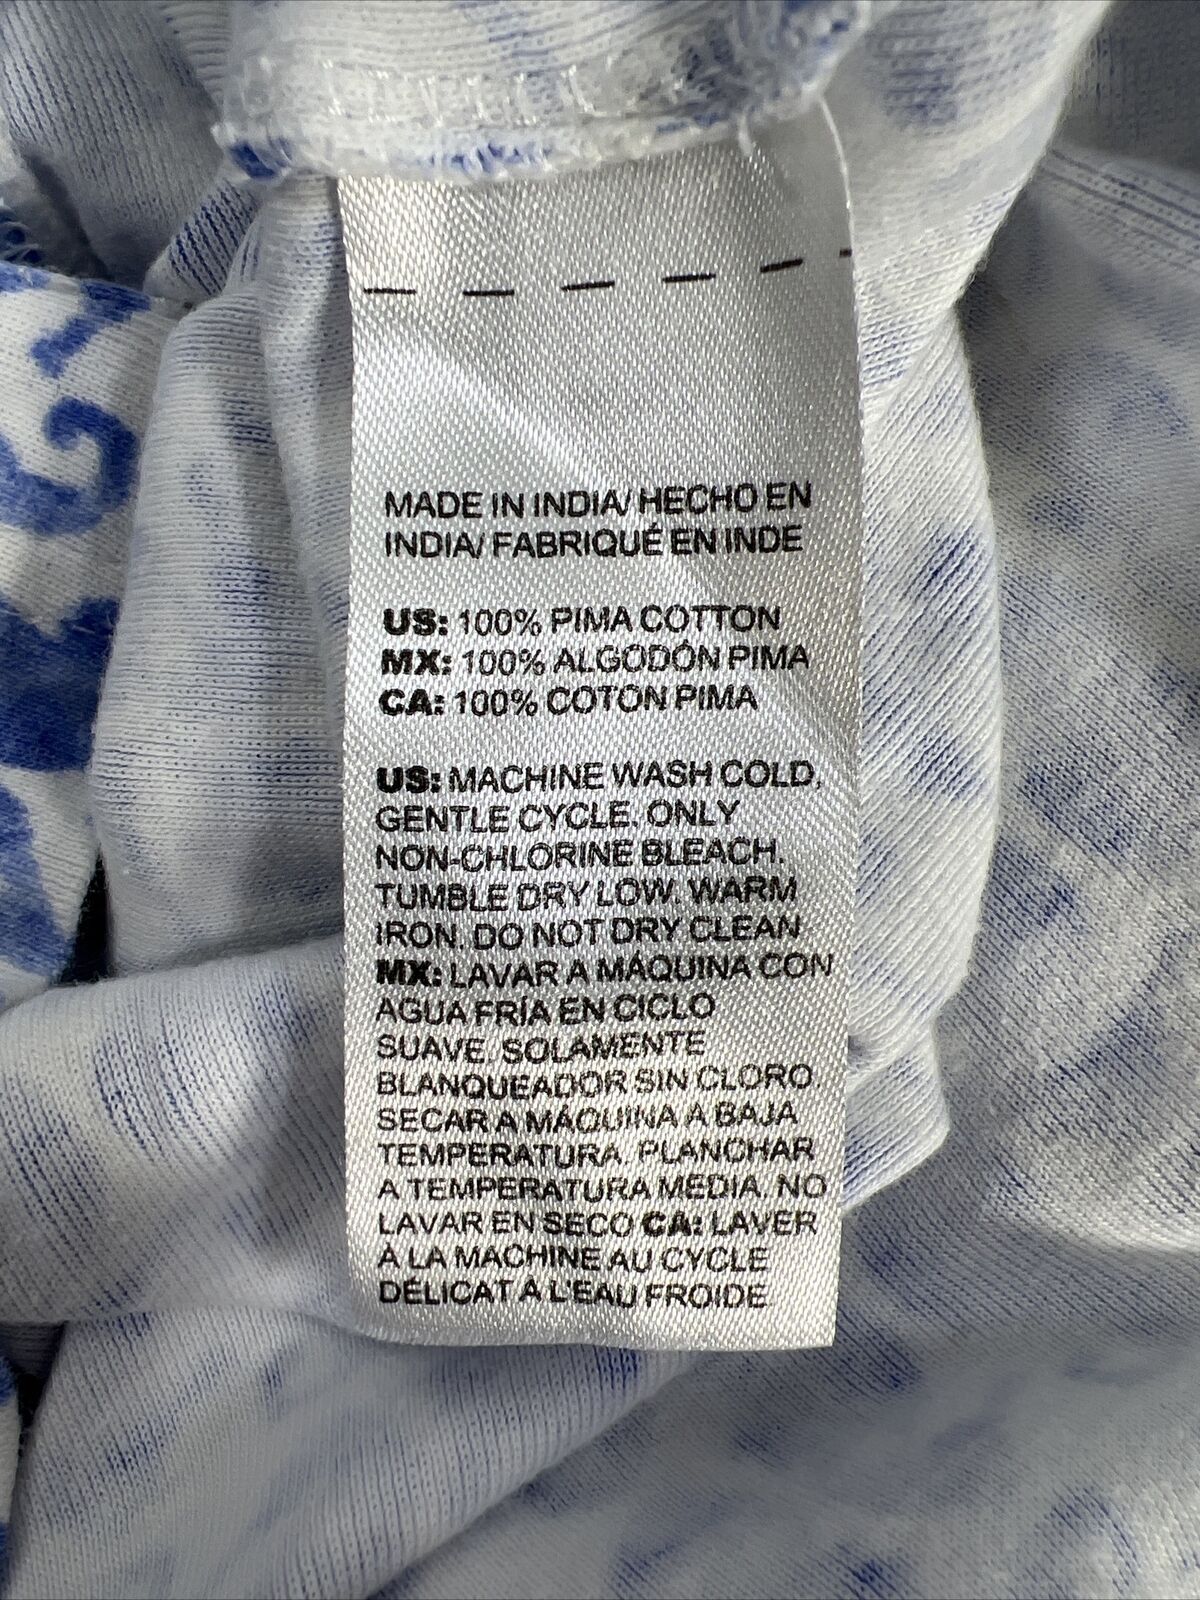 Chico's Camiseta de manga corta con diseño de caballito de mar azul/blanco para mujer - 2/US L